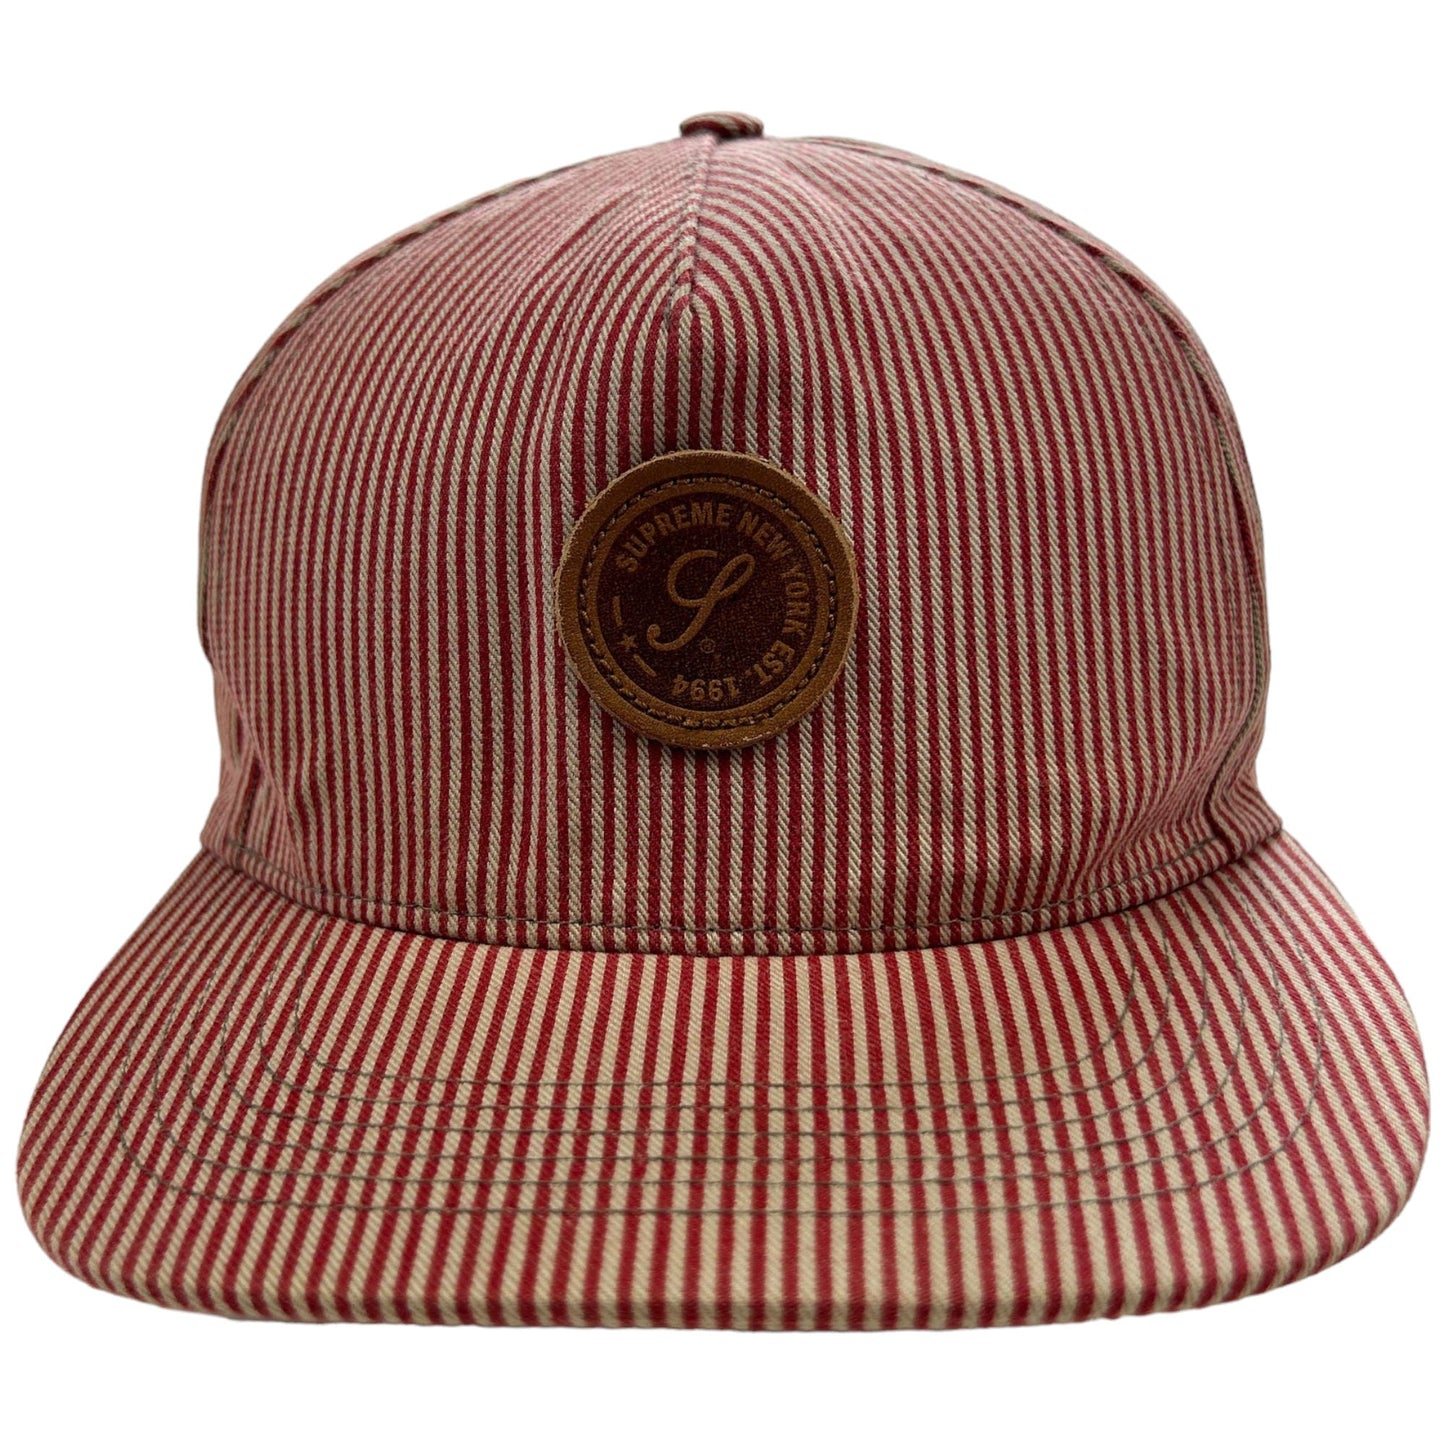 Supreme Striped Snapback Hat